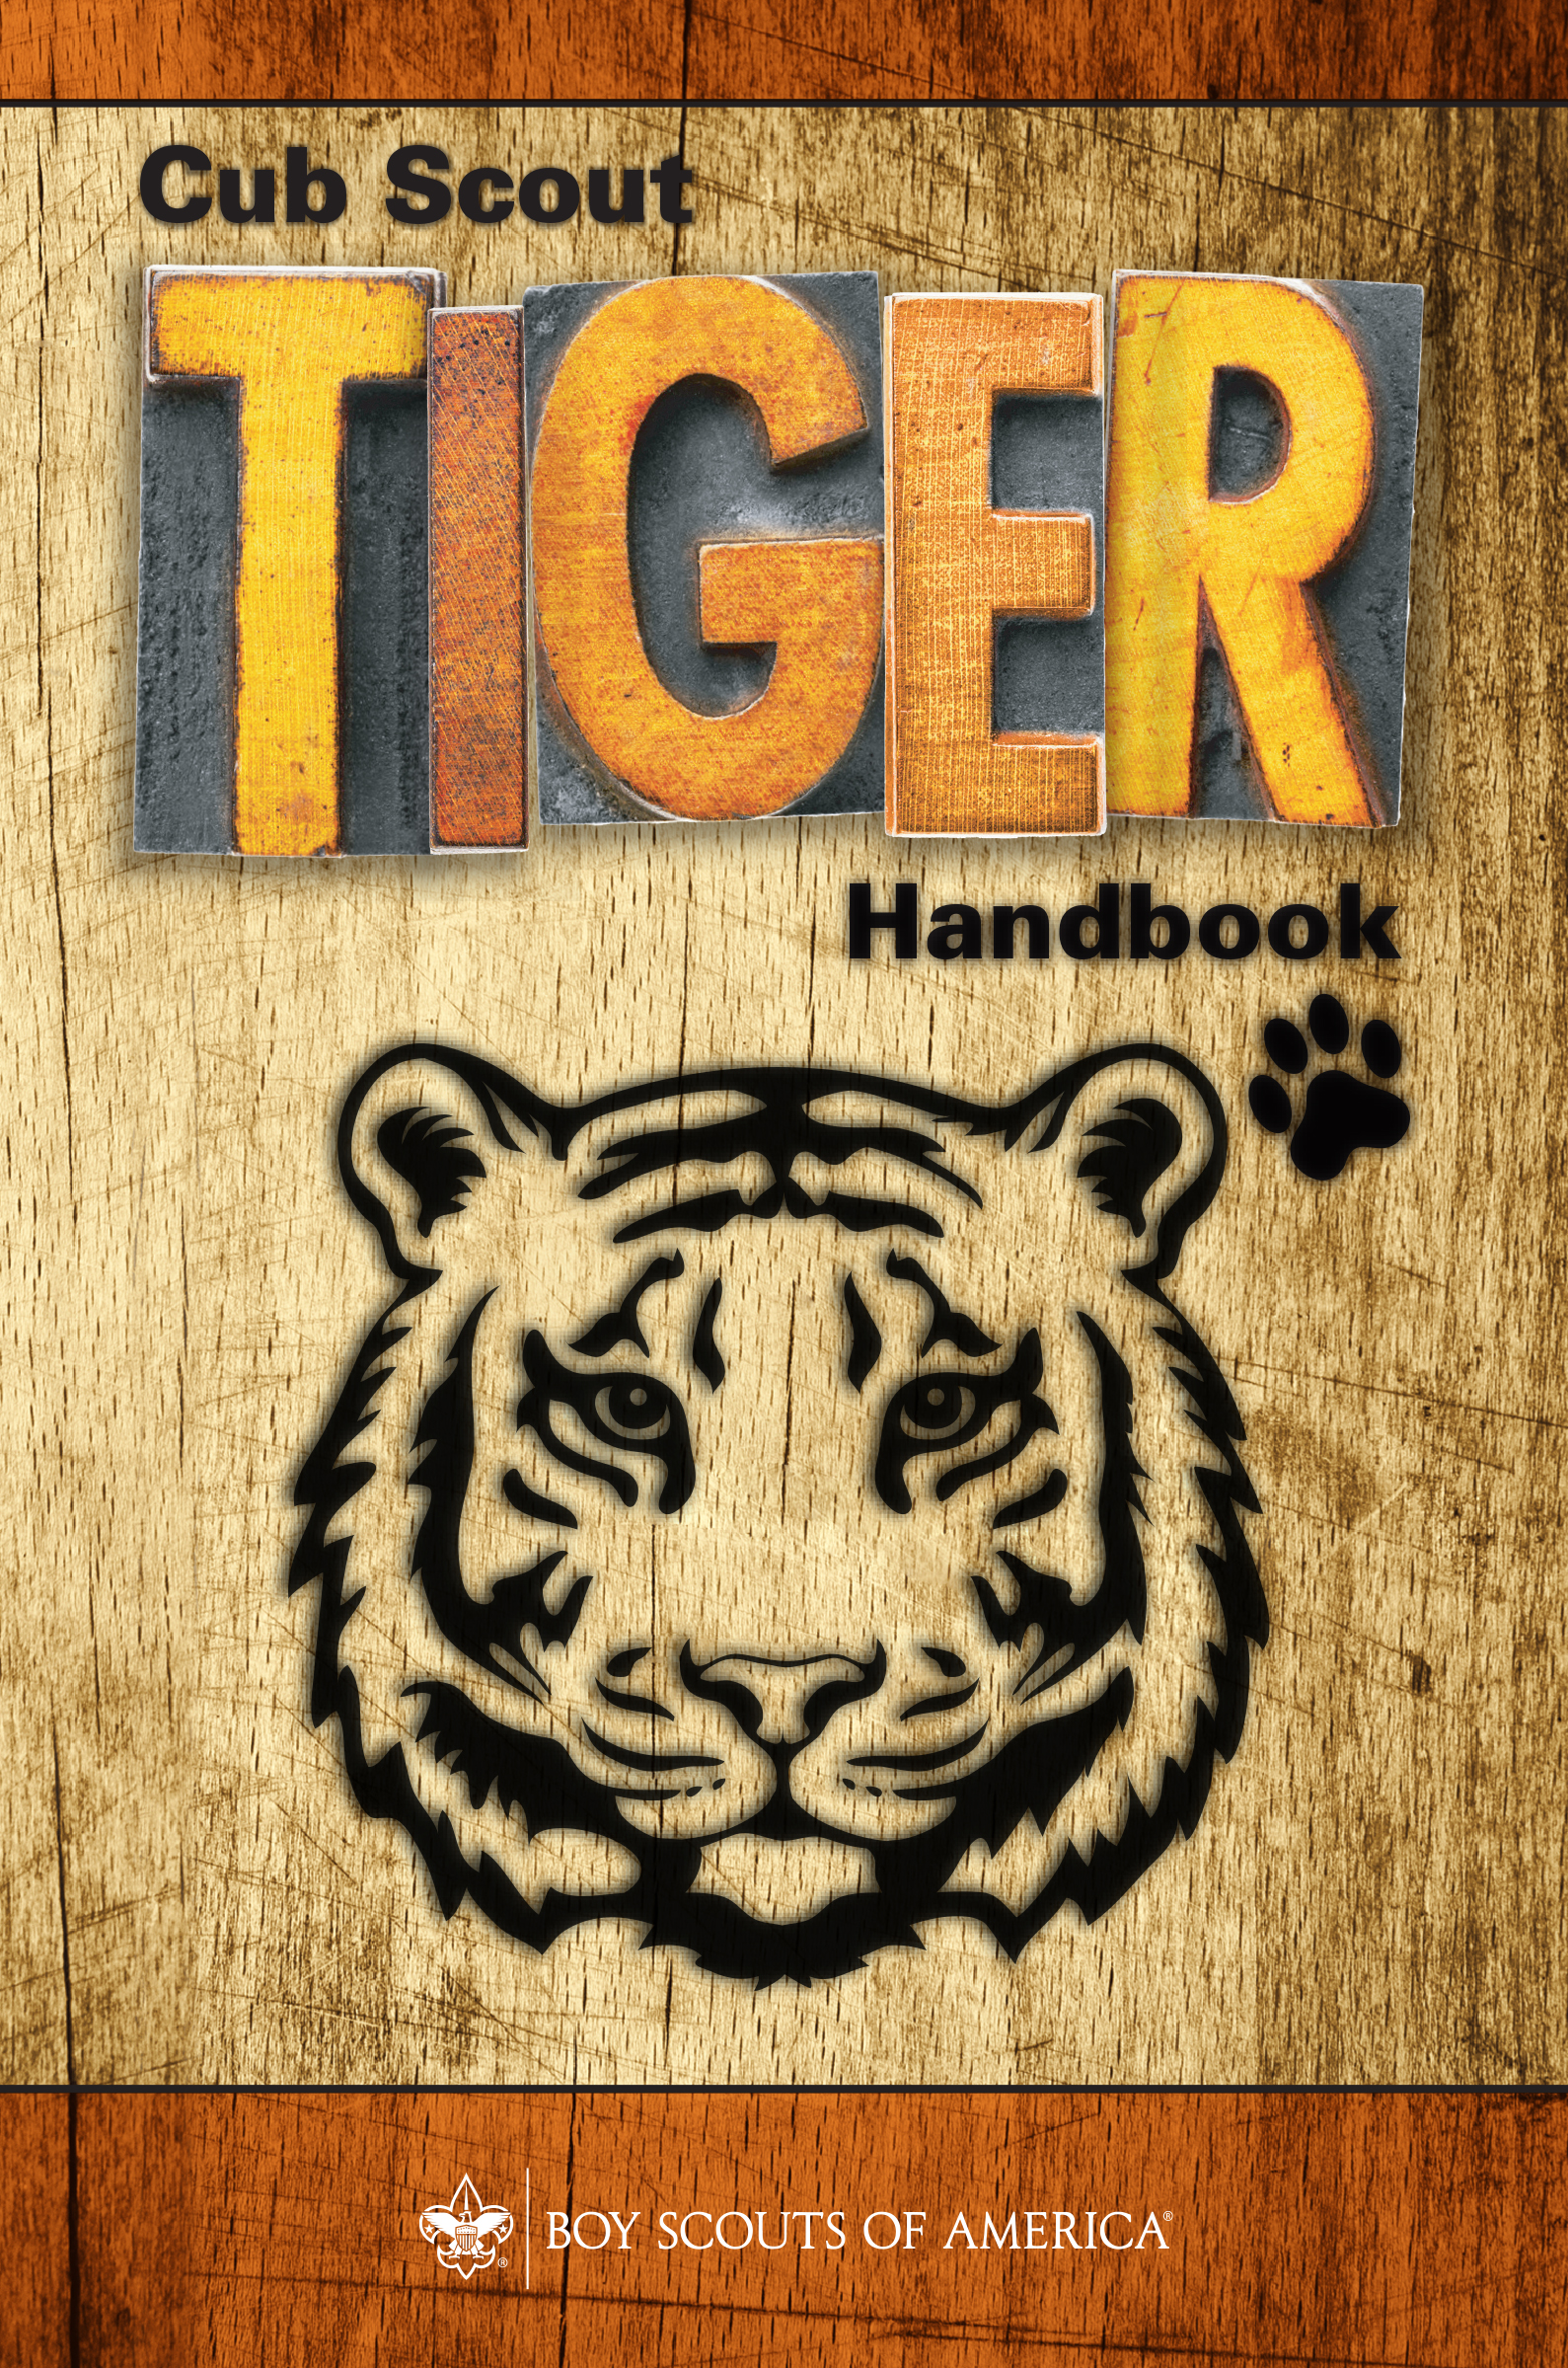 http://www.scouting.org/filestore/marketing/Brand/CubScouts/Youth%20Handbooks/Tiger%20Handbook.jpg